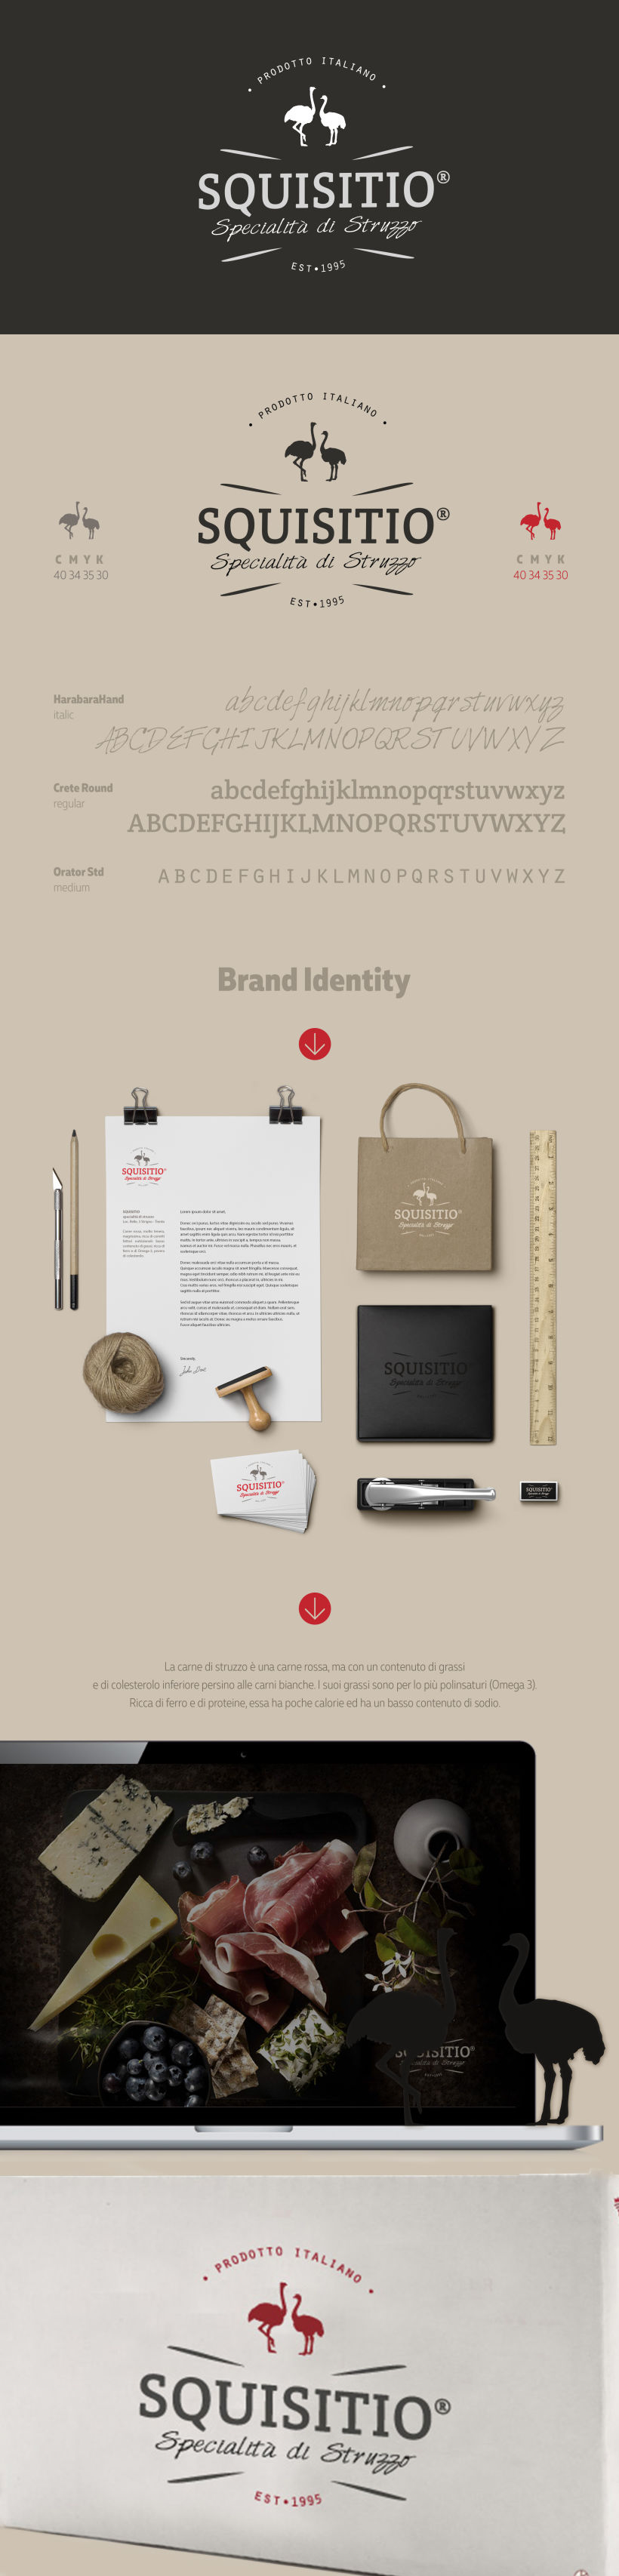 Brand Identity Squisitio - carne de avestruz -1